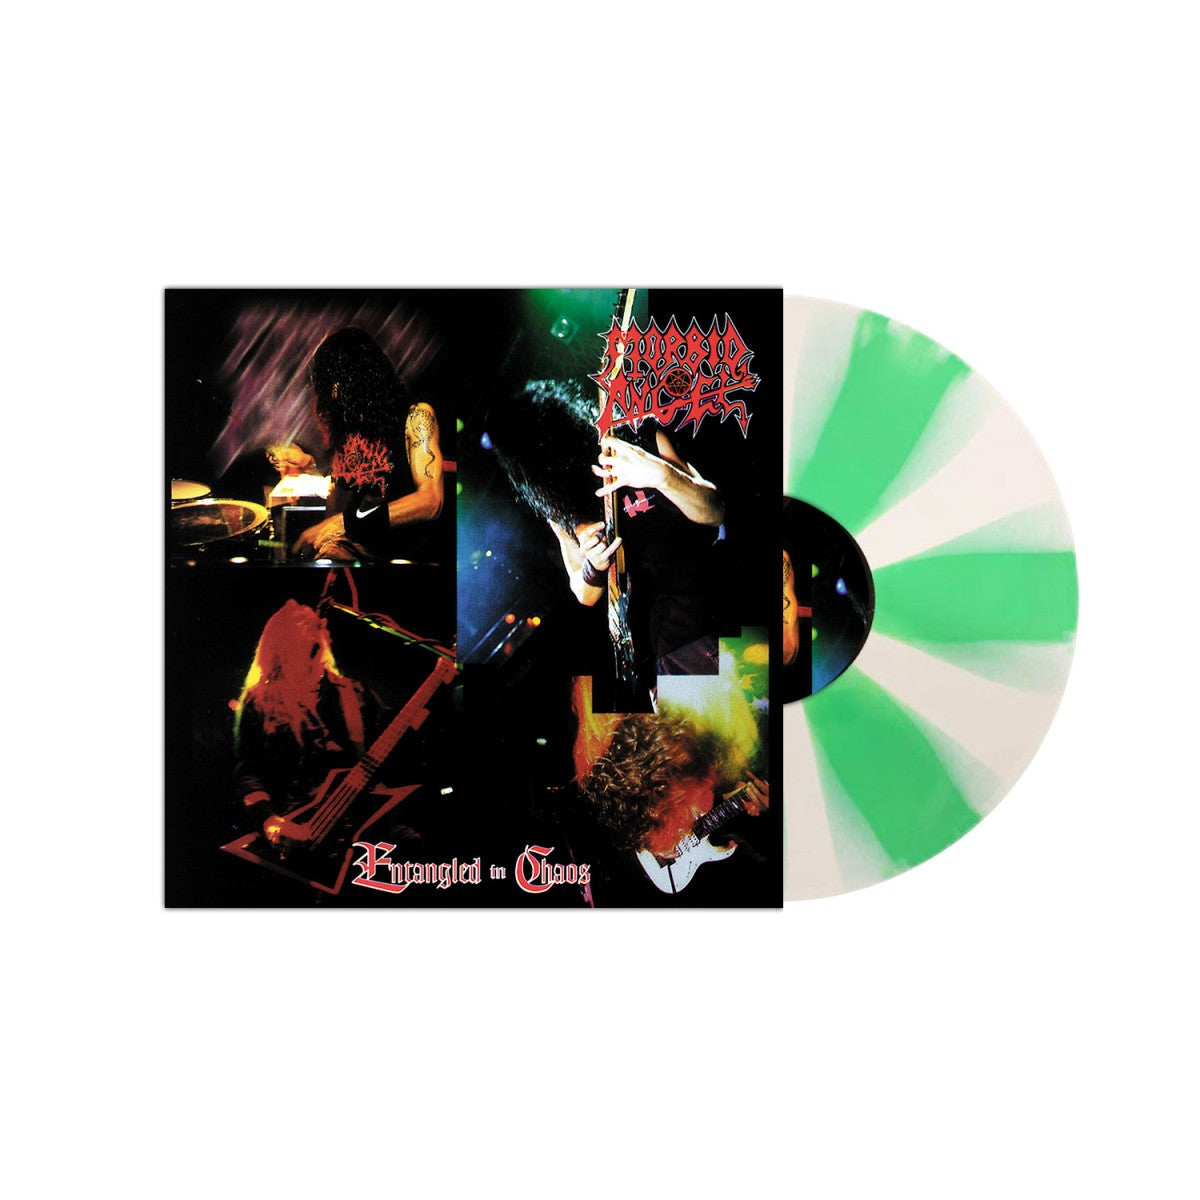 Morbid Angel "Entangled In Chaos" Green /White Pinwheel Vinyl